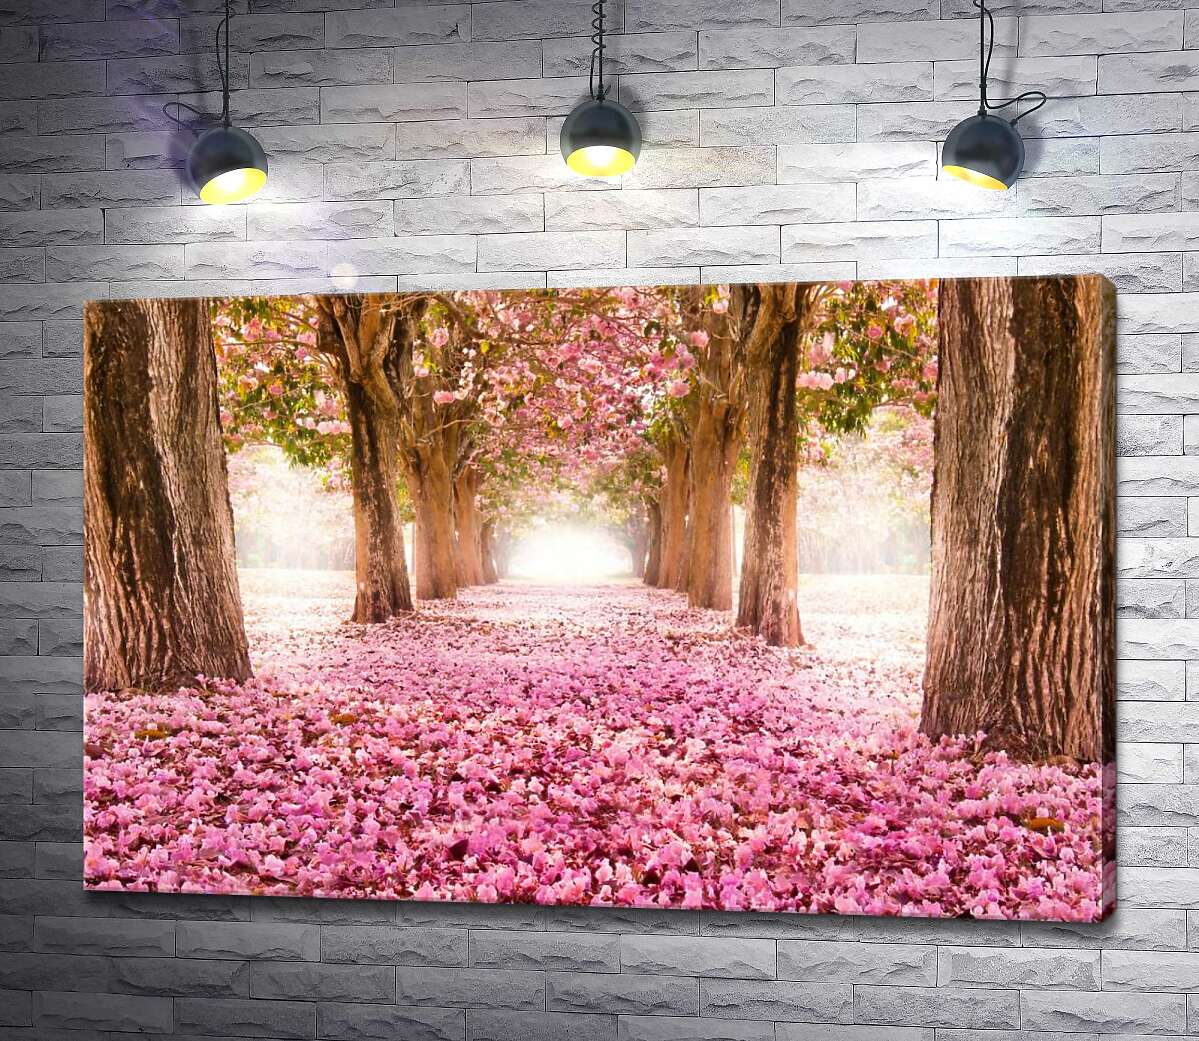 картина Розовая дорожка среди цветущей аллеи сакур